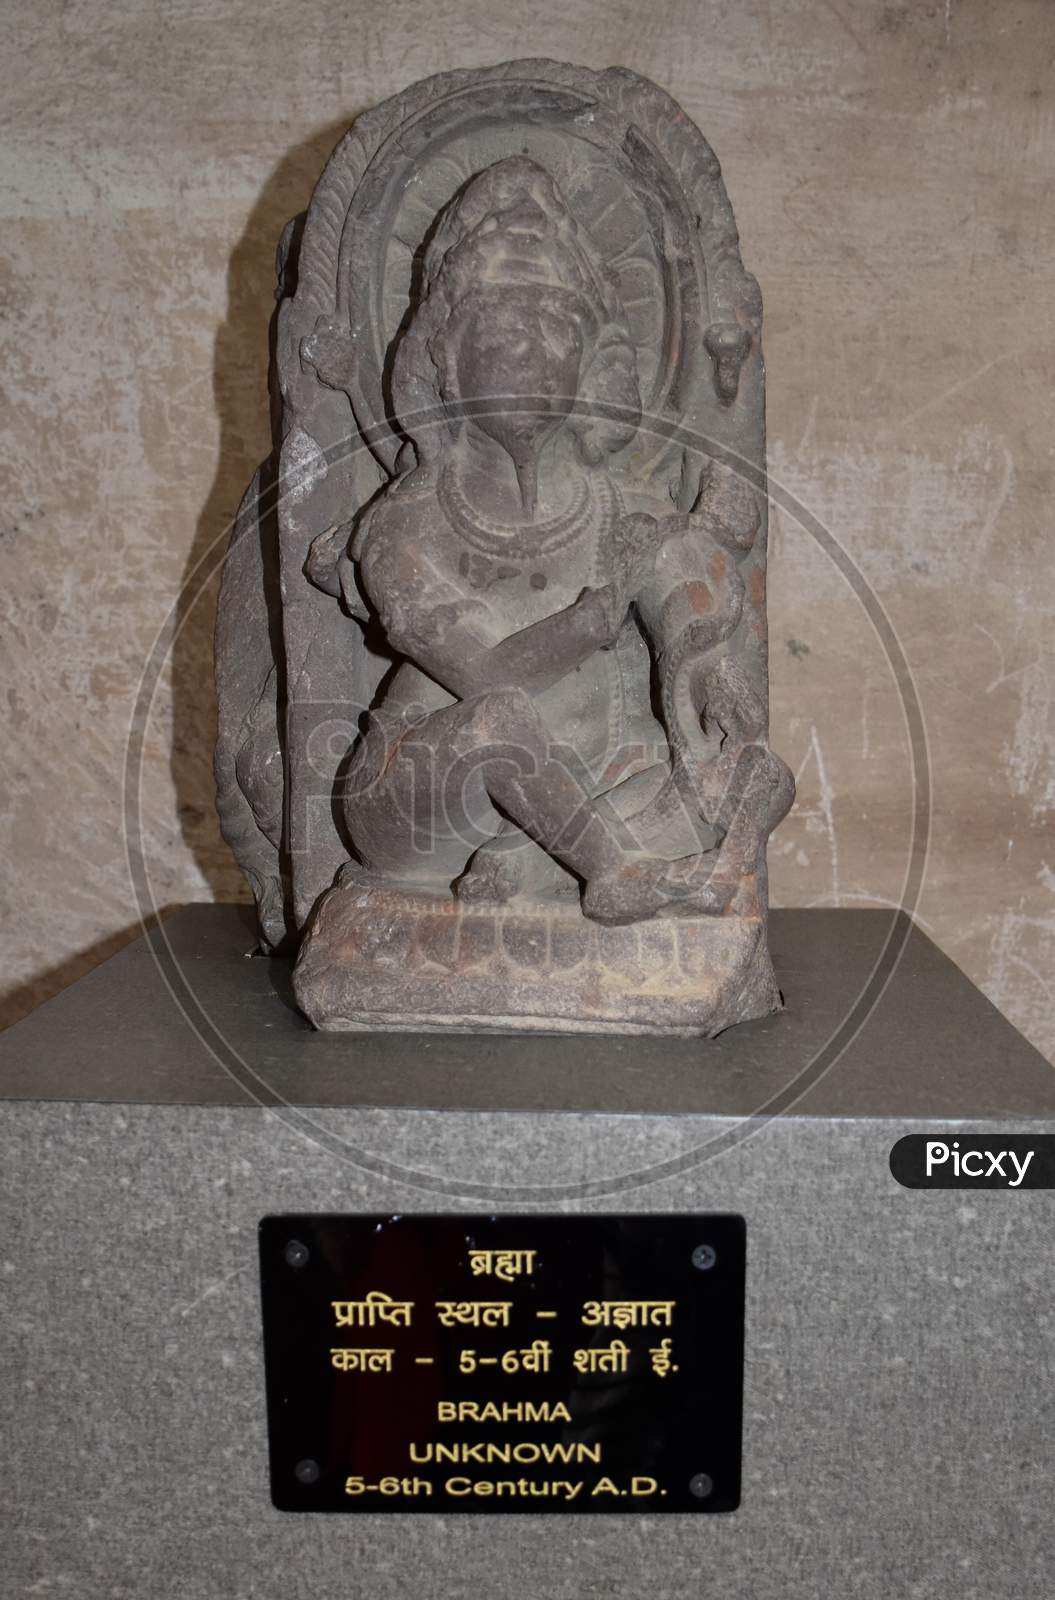 Gwalior, Madhya Pradesh/India - March 15, 2020 : Sculpture Of Brahma Built In 5-6Th Century A.D.